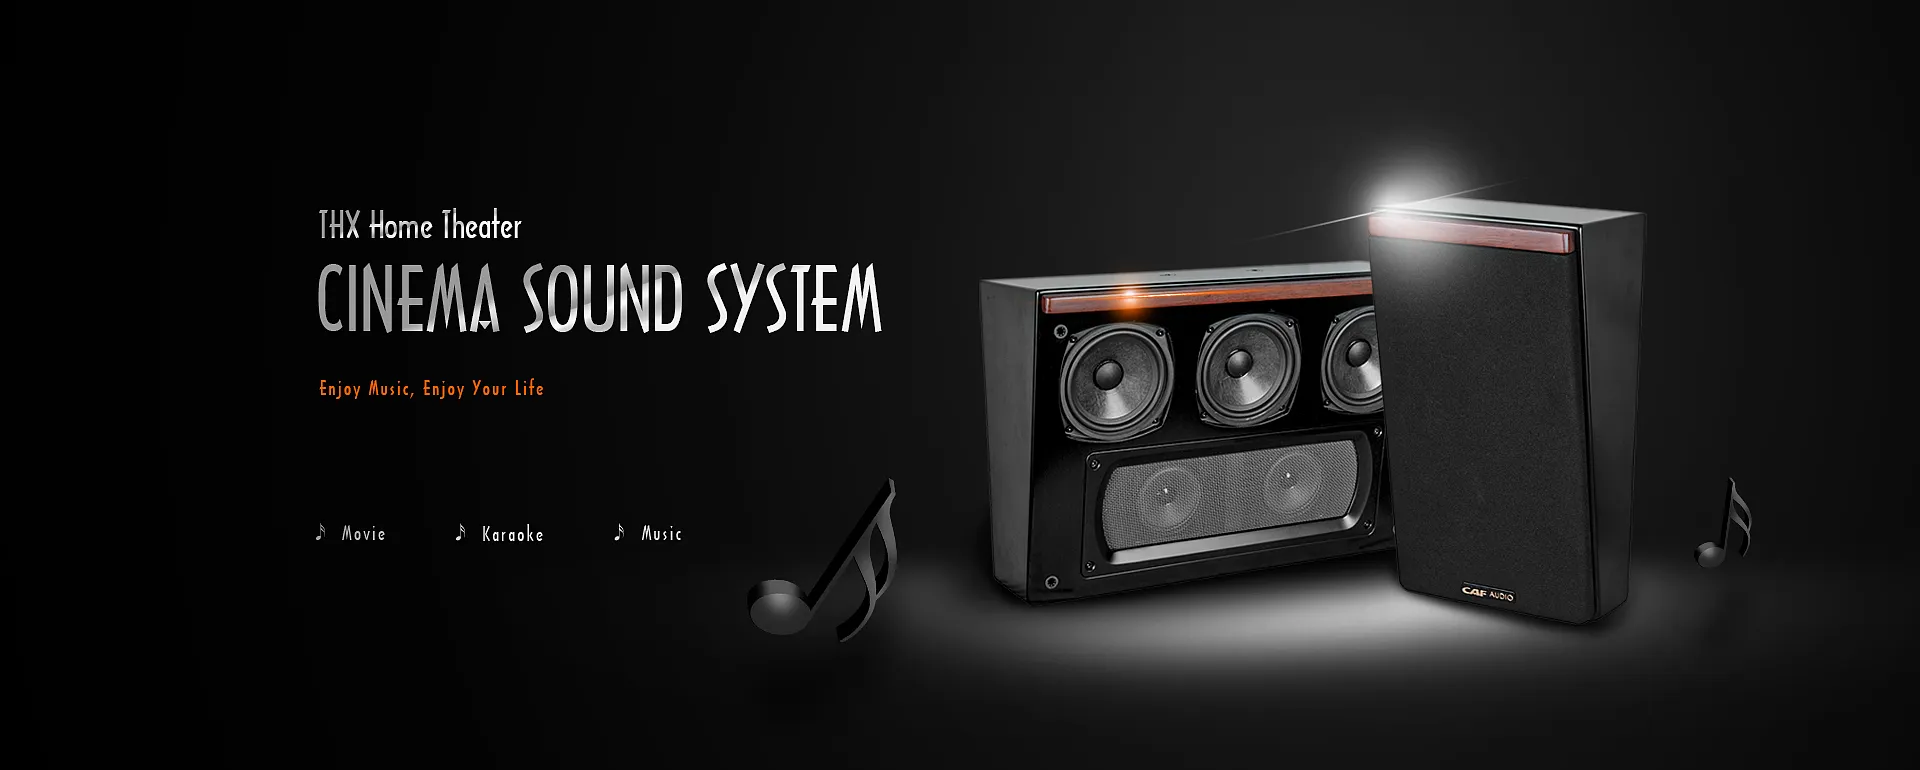 Cinema Sound System